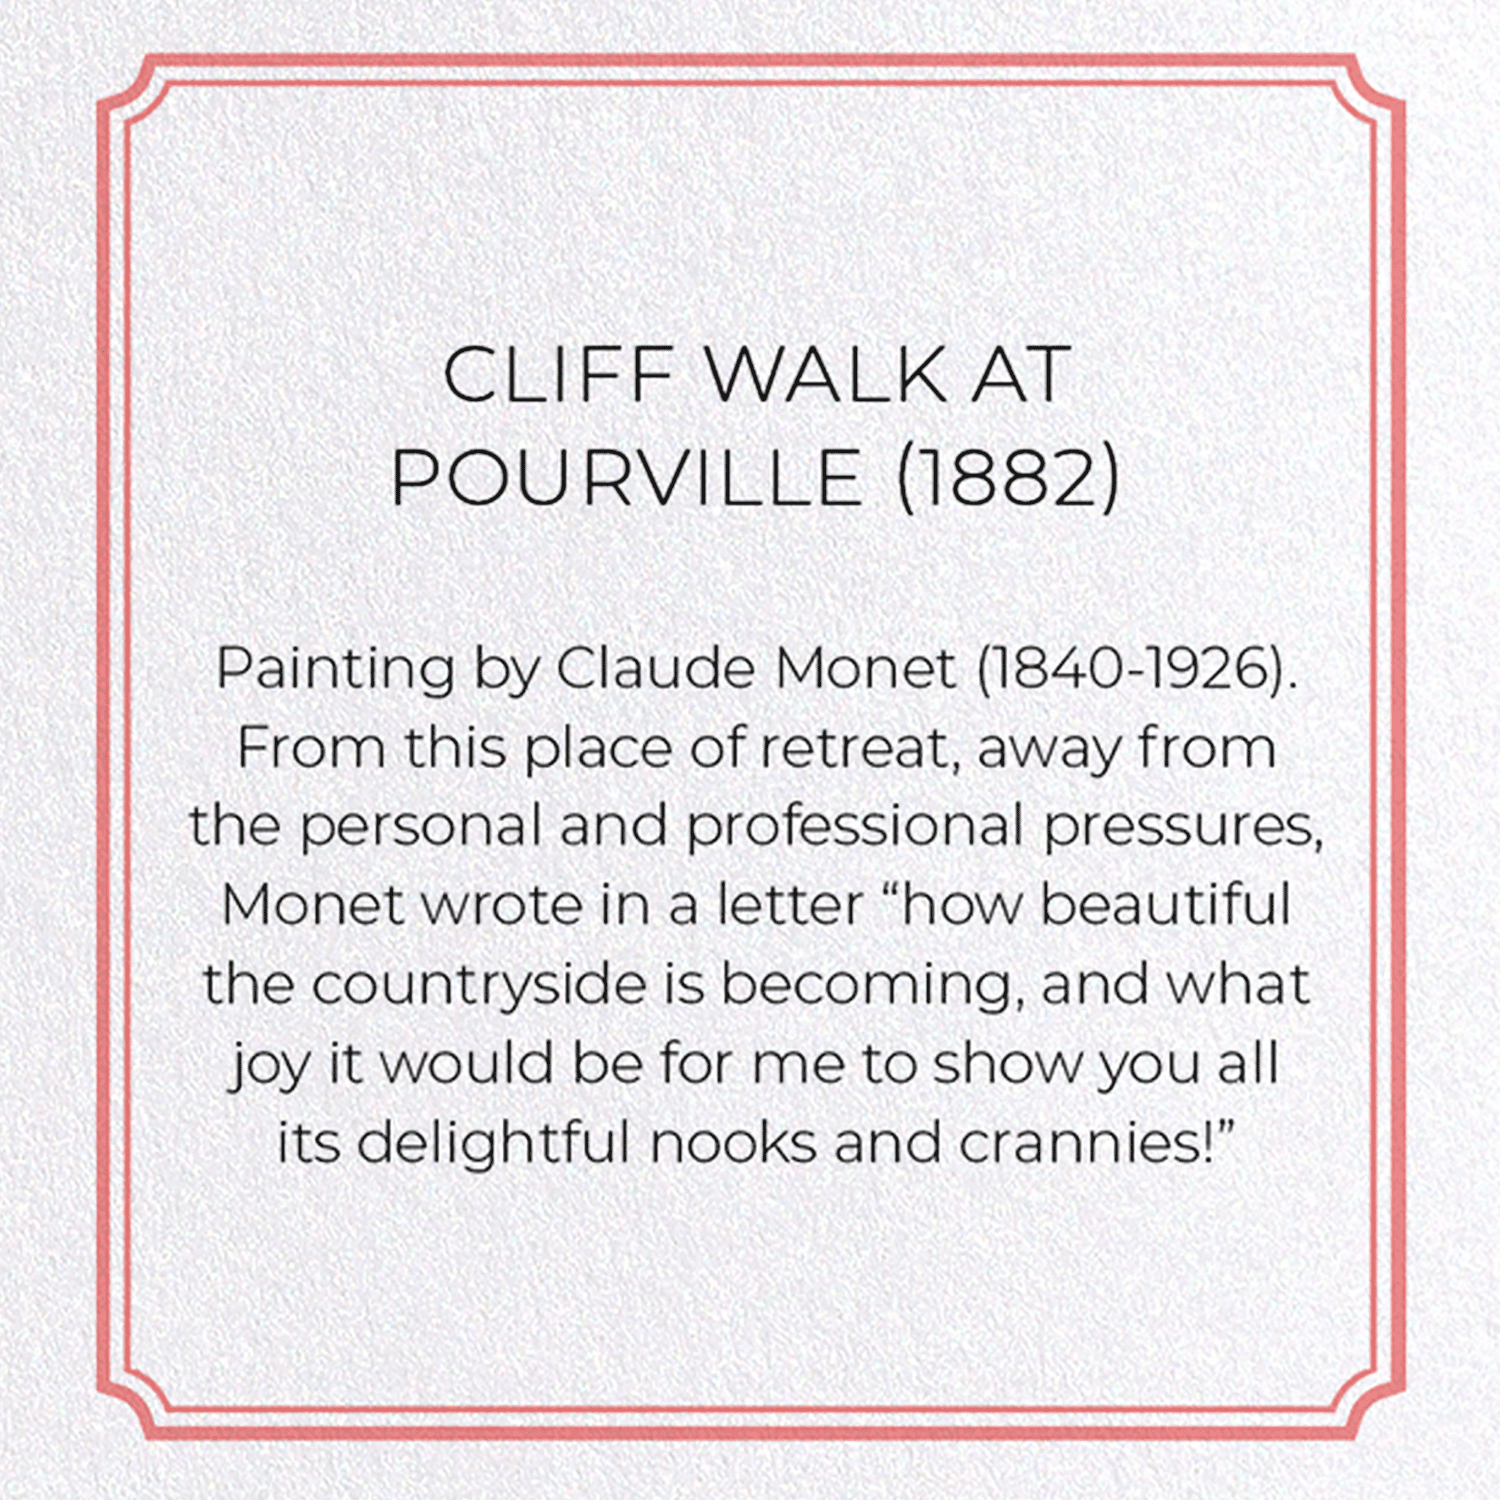 CLIFF WALK AT POURVILLE (1882)